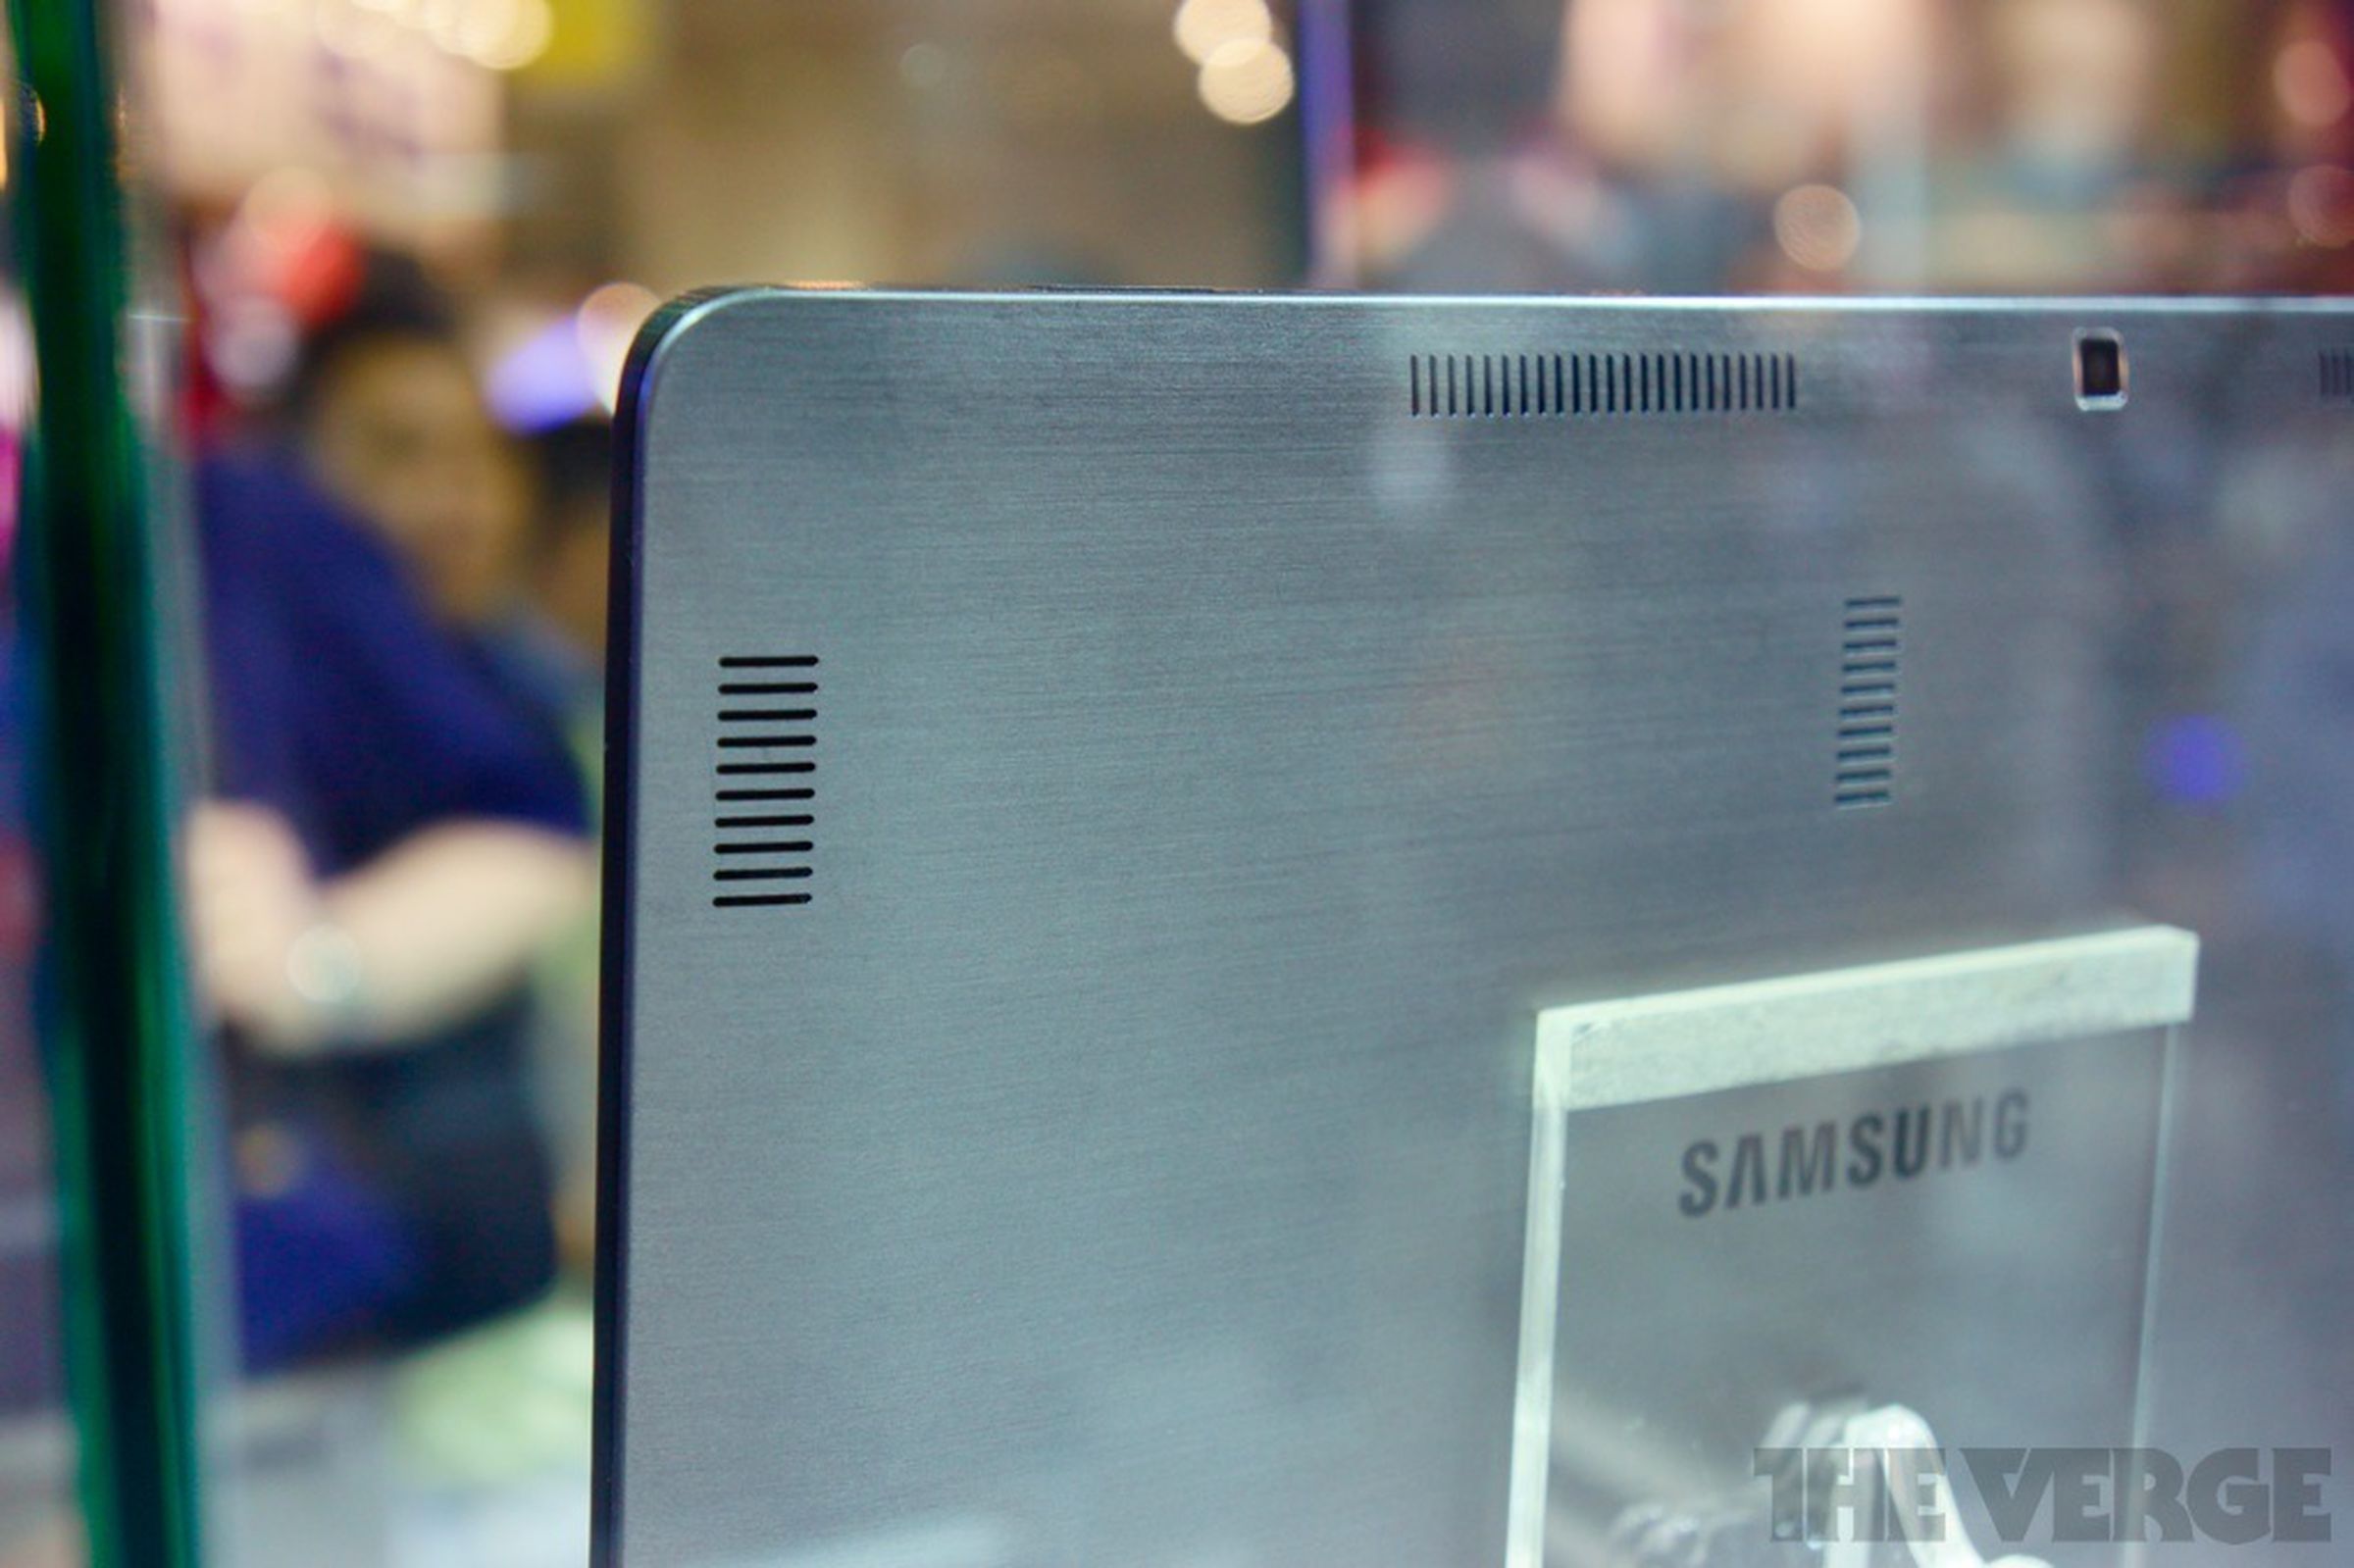 Samsung Series 5 Hybrid PC concept photos